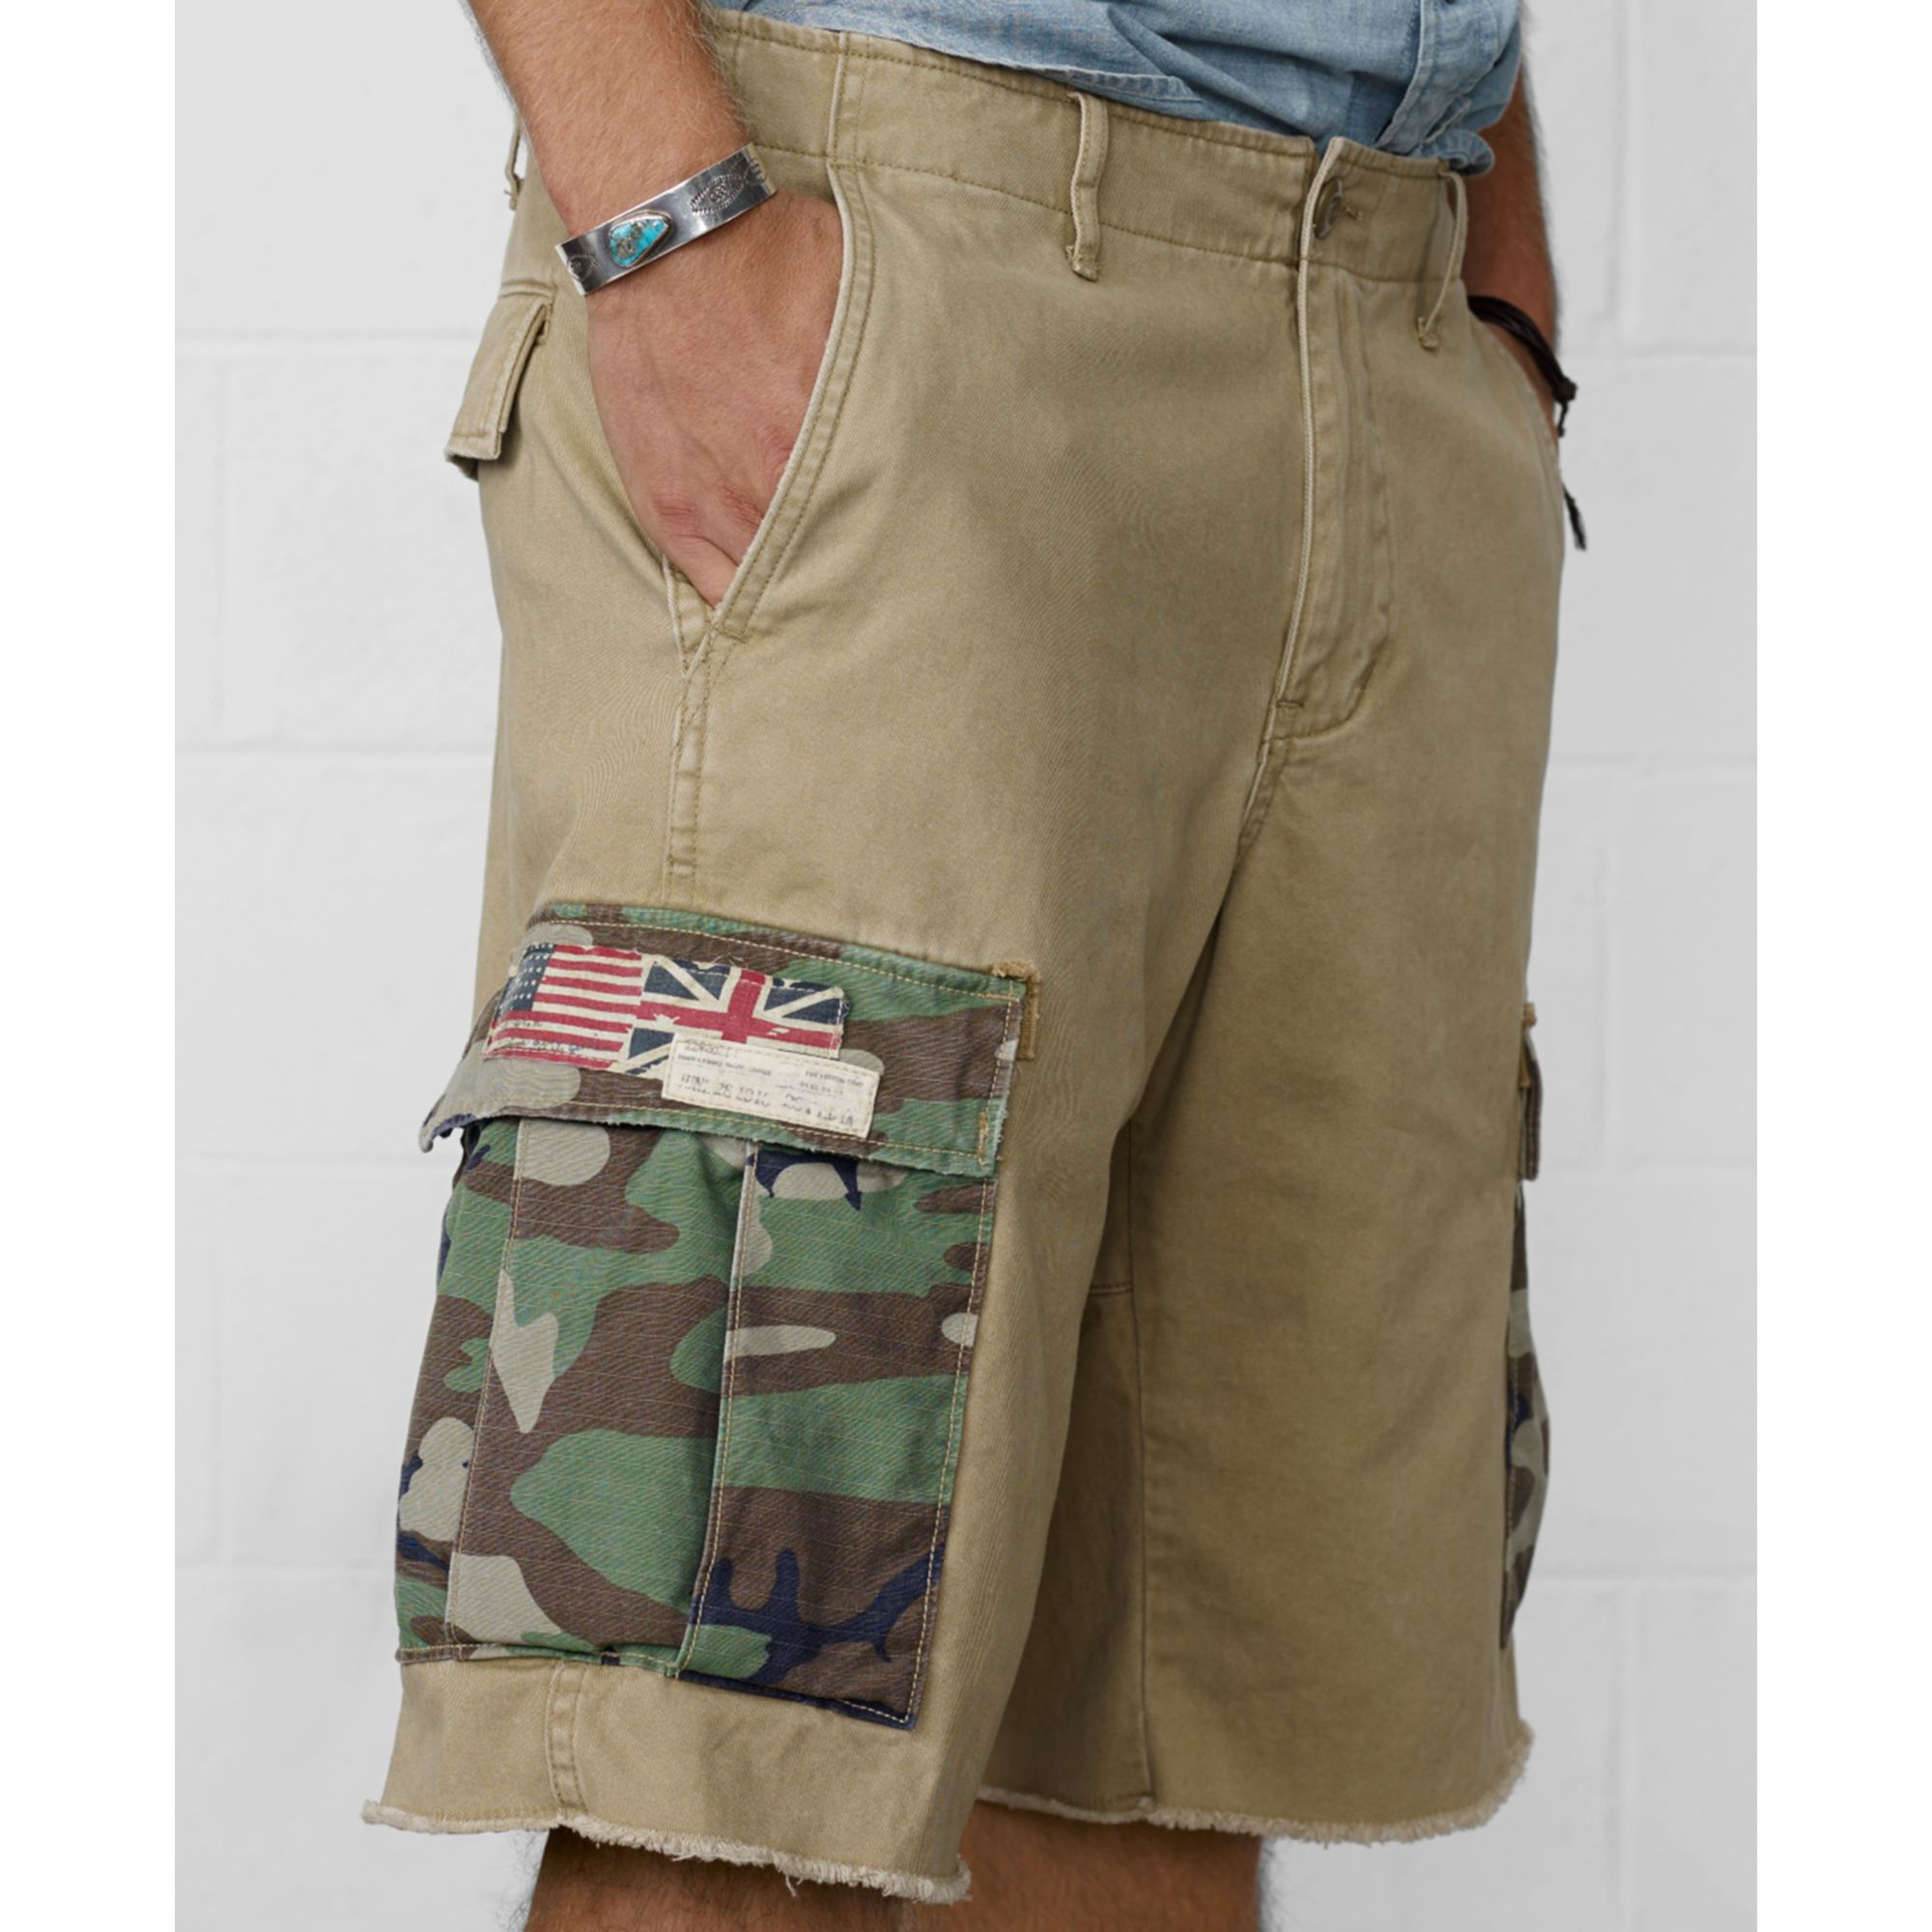 Lyst - Denim & Supply Ralph Lauren Cutoff Military Camo Cargo Shorts in ...